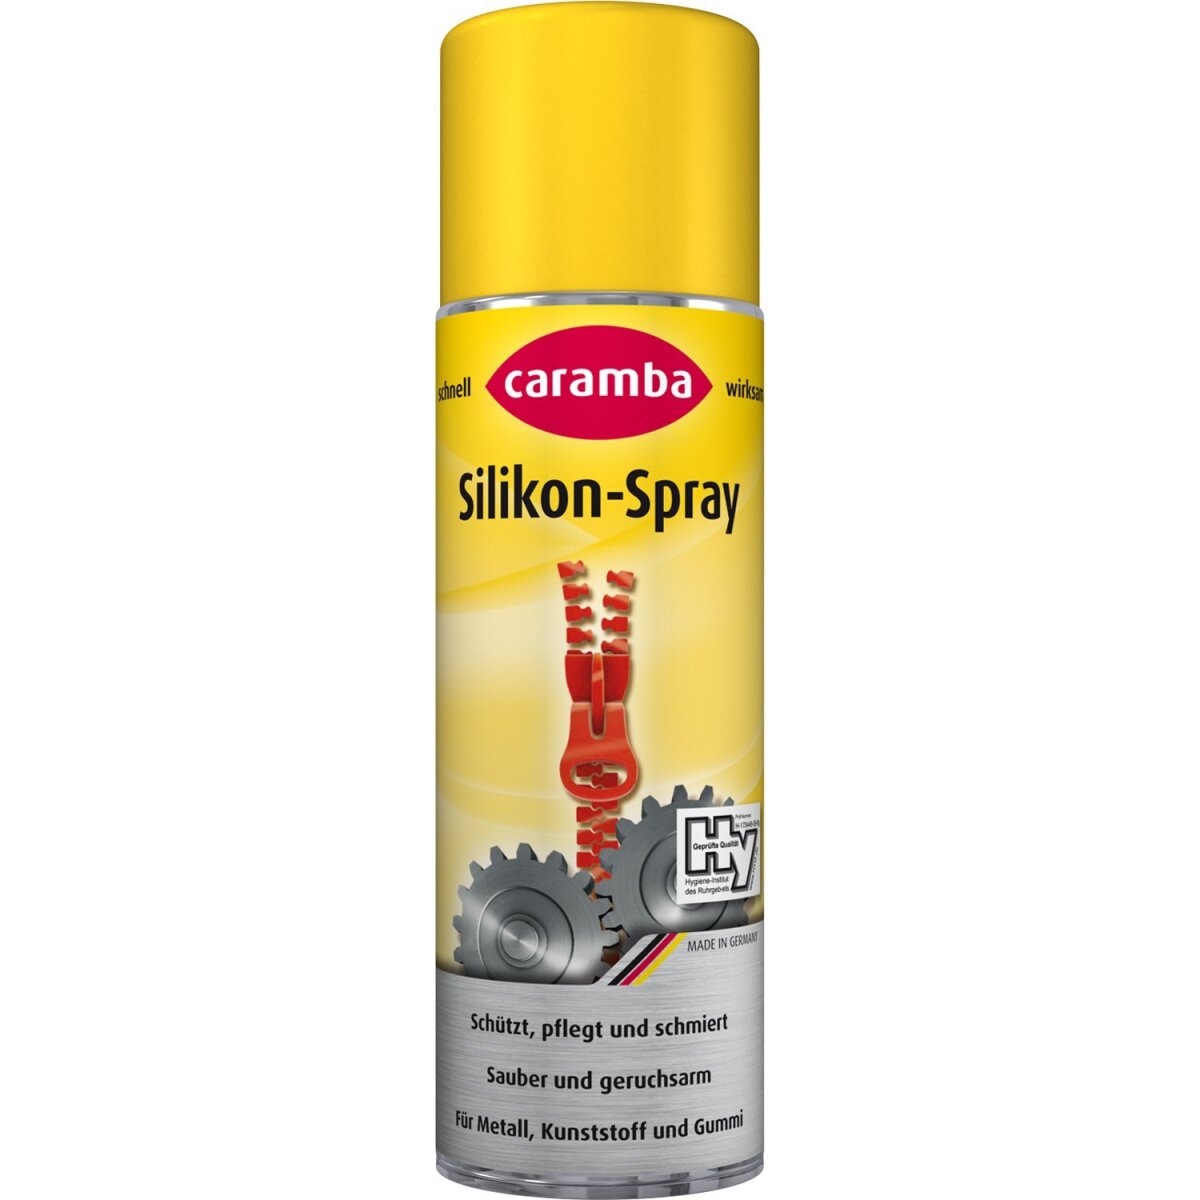 Caramba Silicone Spray Multifuntional Lubricant Agent 300ml, 11,41 €